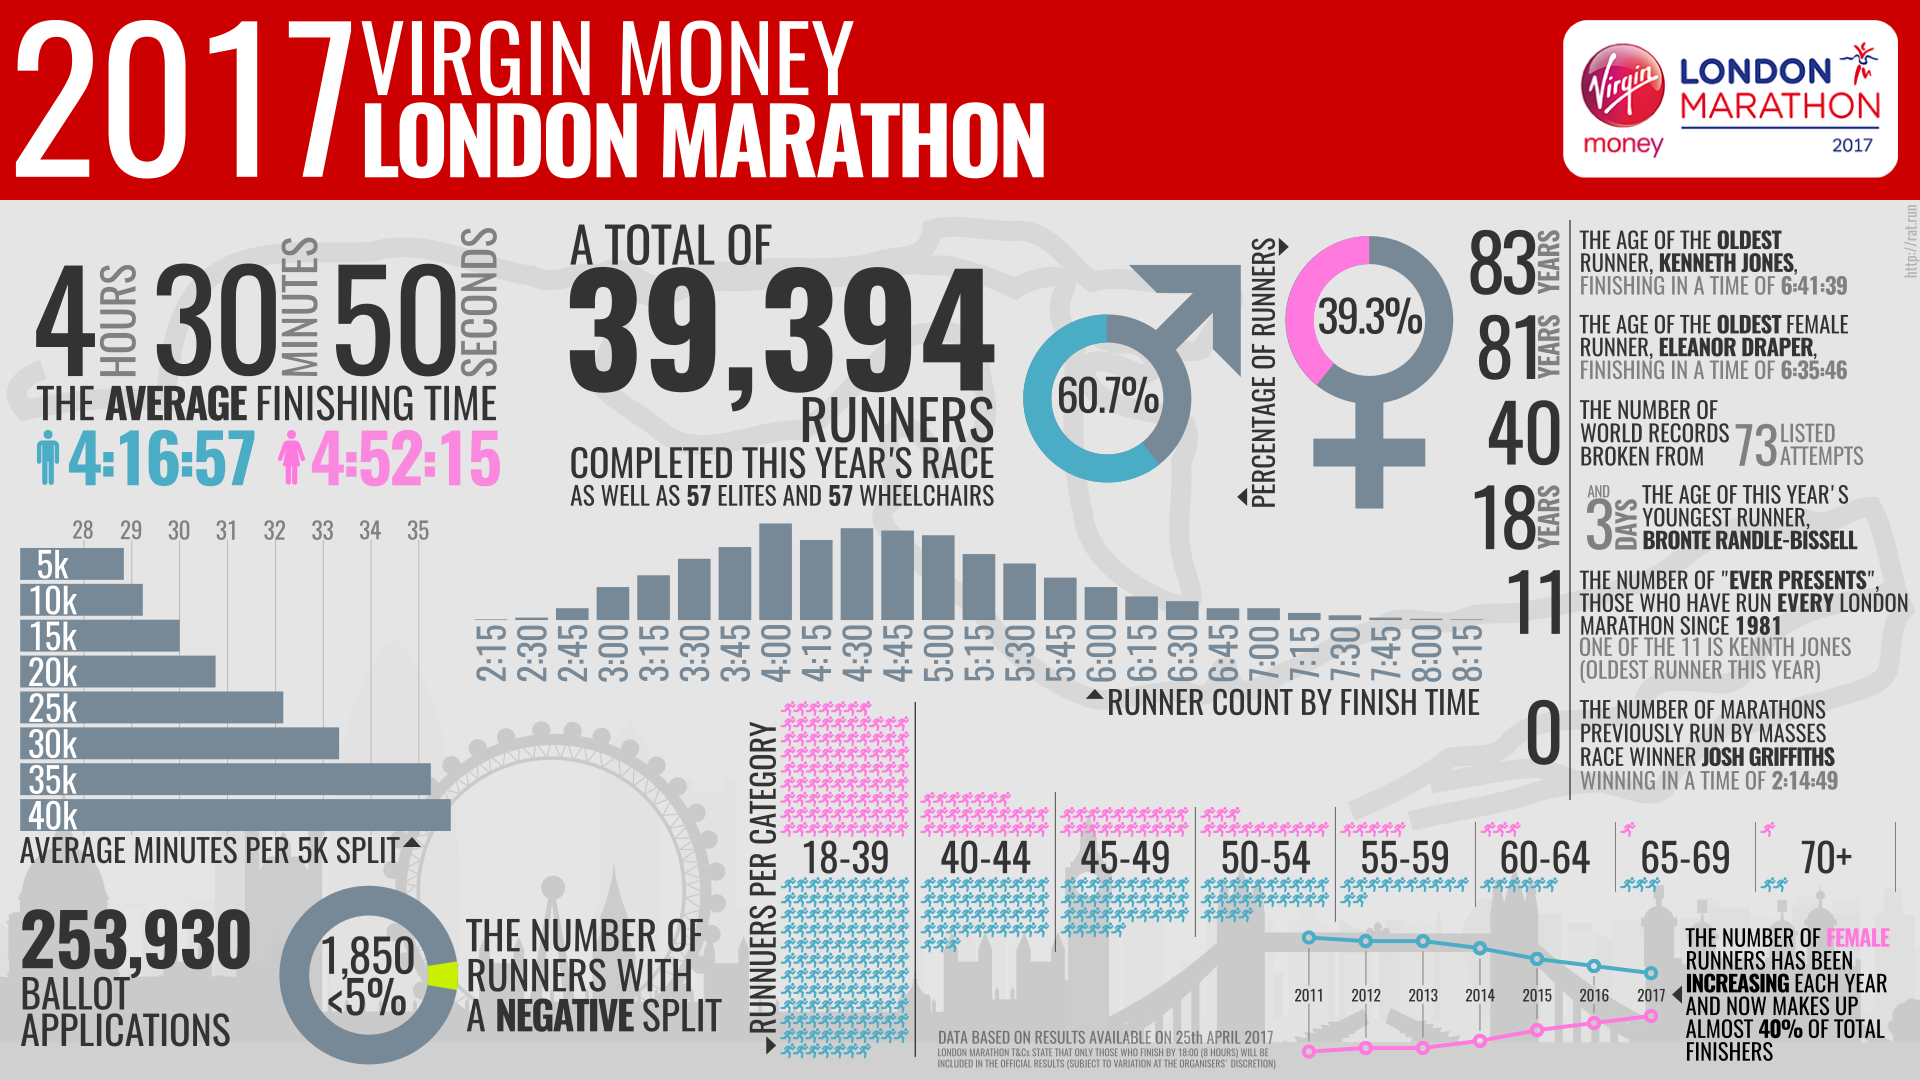 London Marathon 2017 Overview